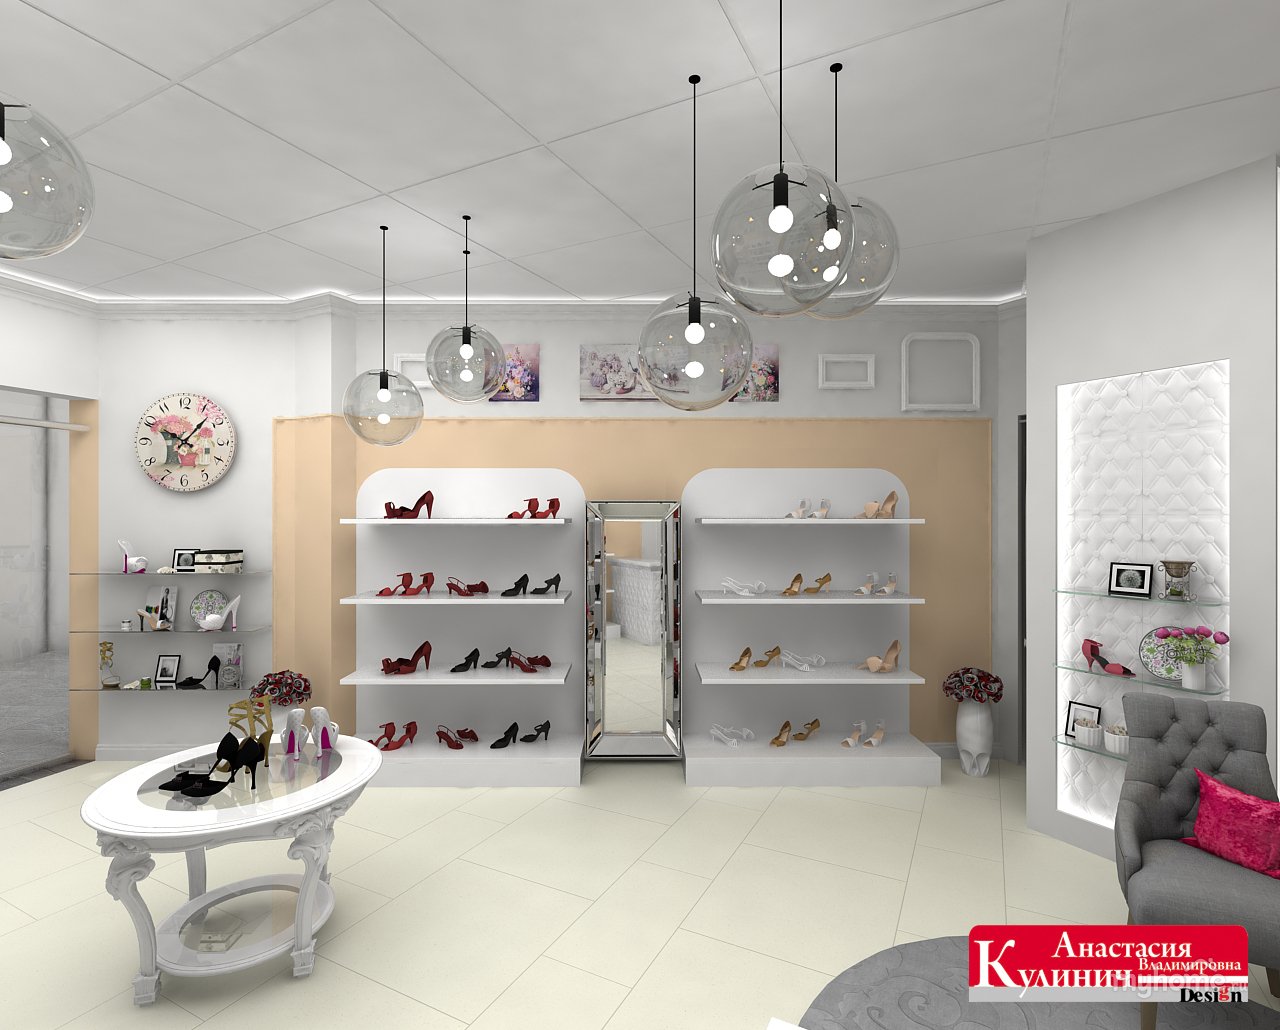 Дизайн проект магазина globomarket ru. Проект магазина обуви. Проект бутика обуви. Дизайн проект магазина. Интерьер фирменного магазина.